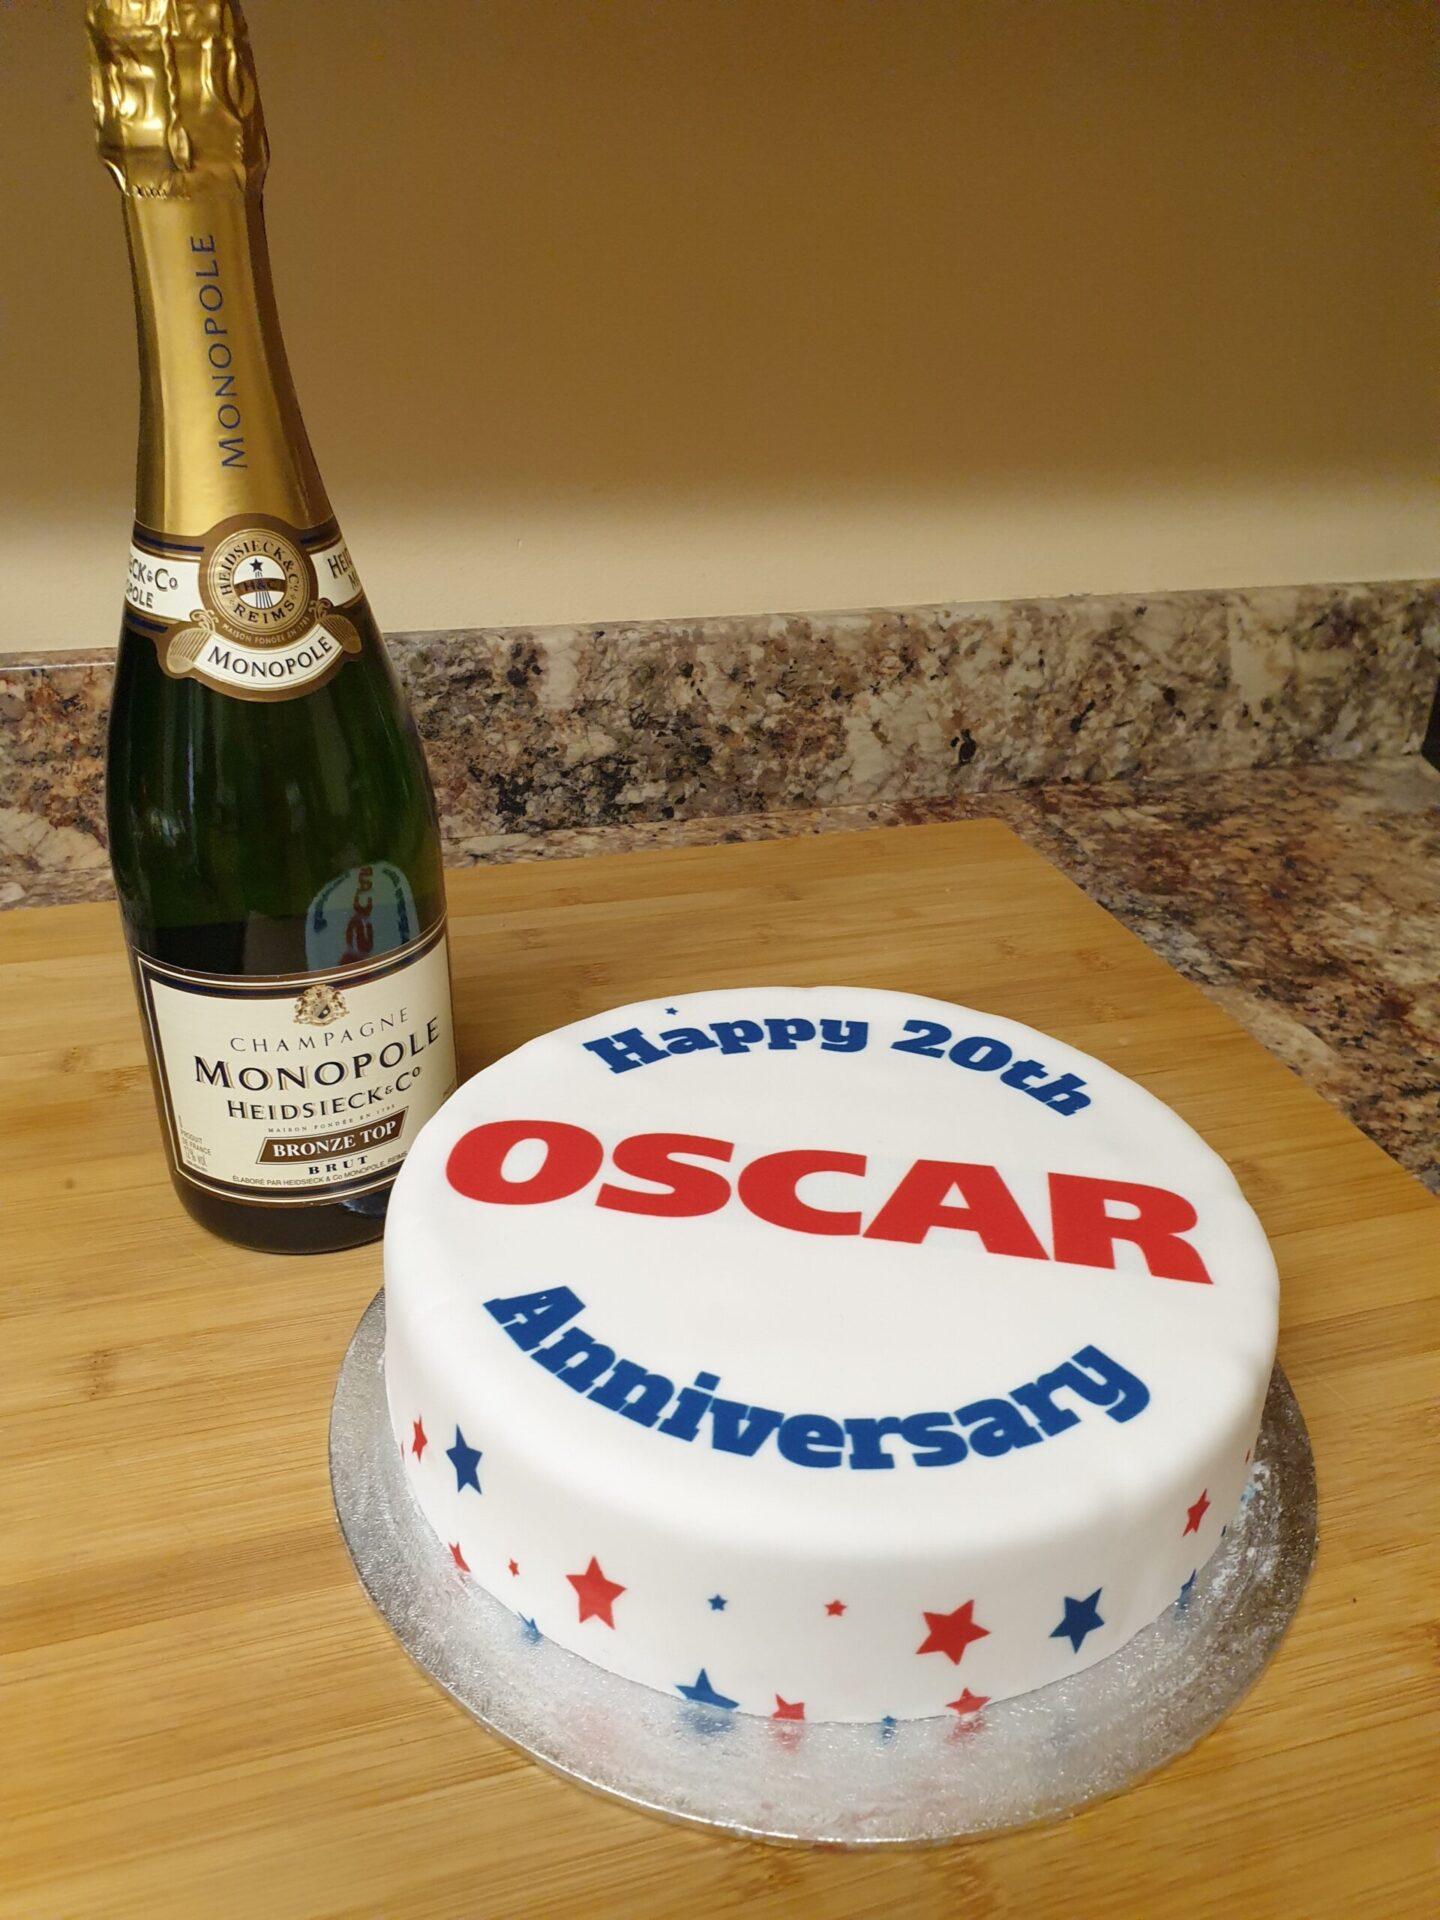 Happy 20th Oscar Anniversary